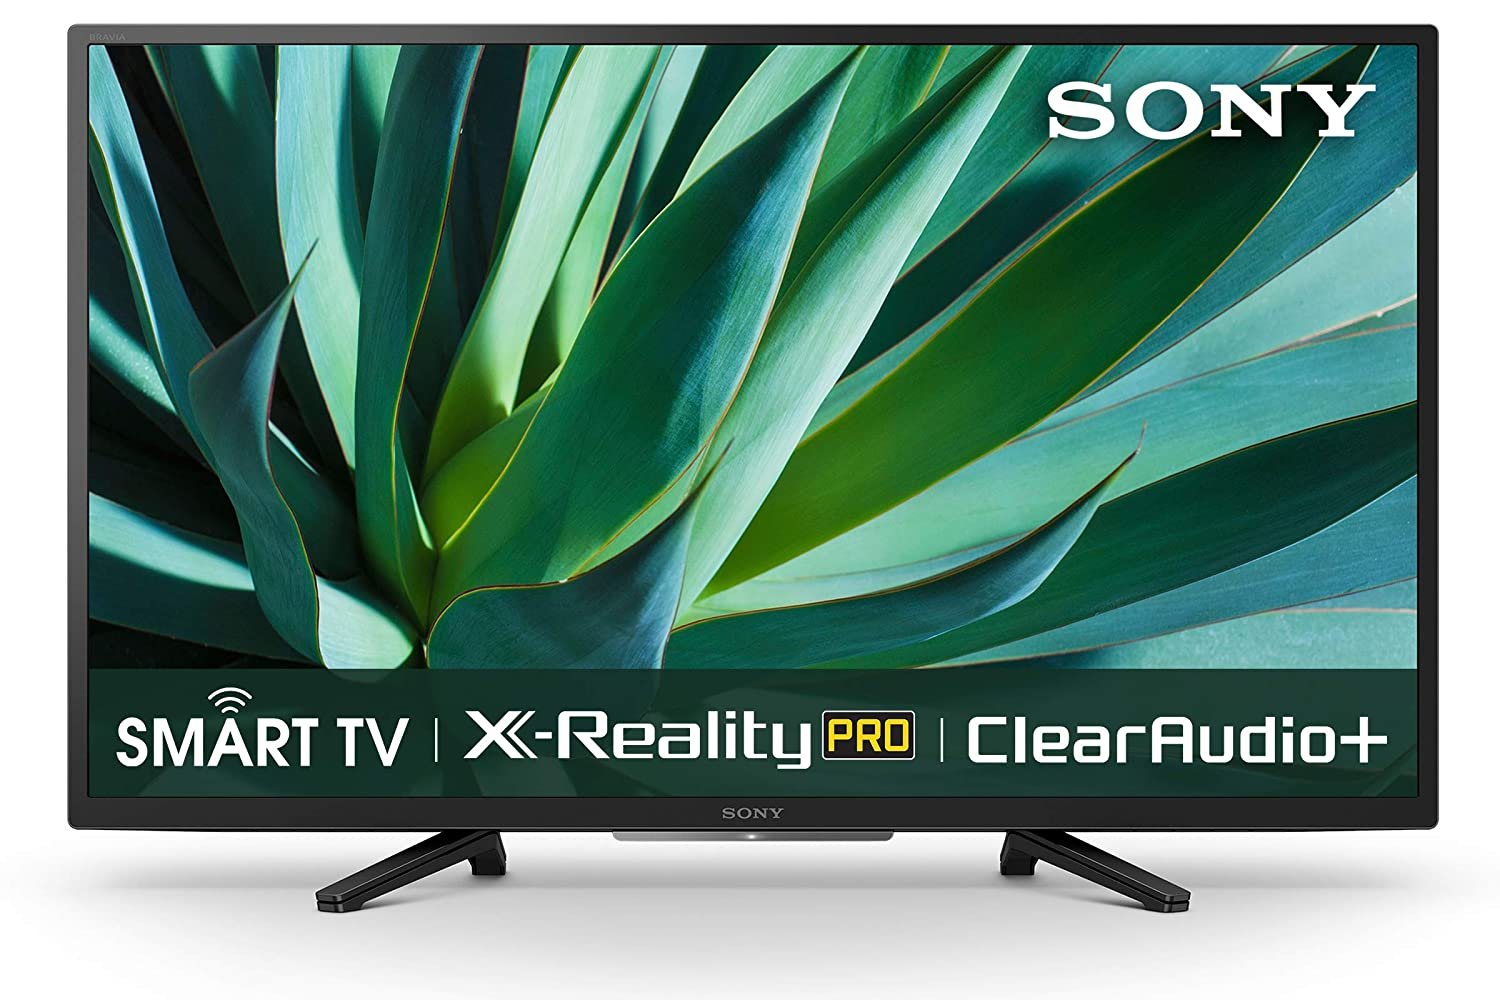 Sony Bravia 80 cm (32 inches) HD Ready Smart LED TV 32W6100 (Black)